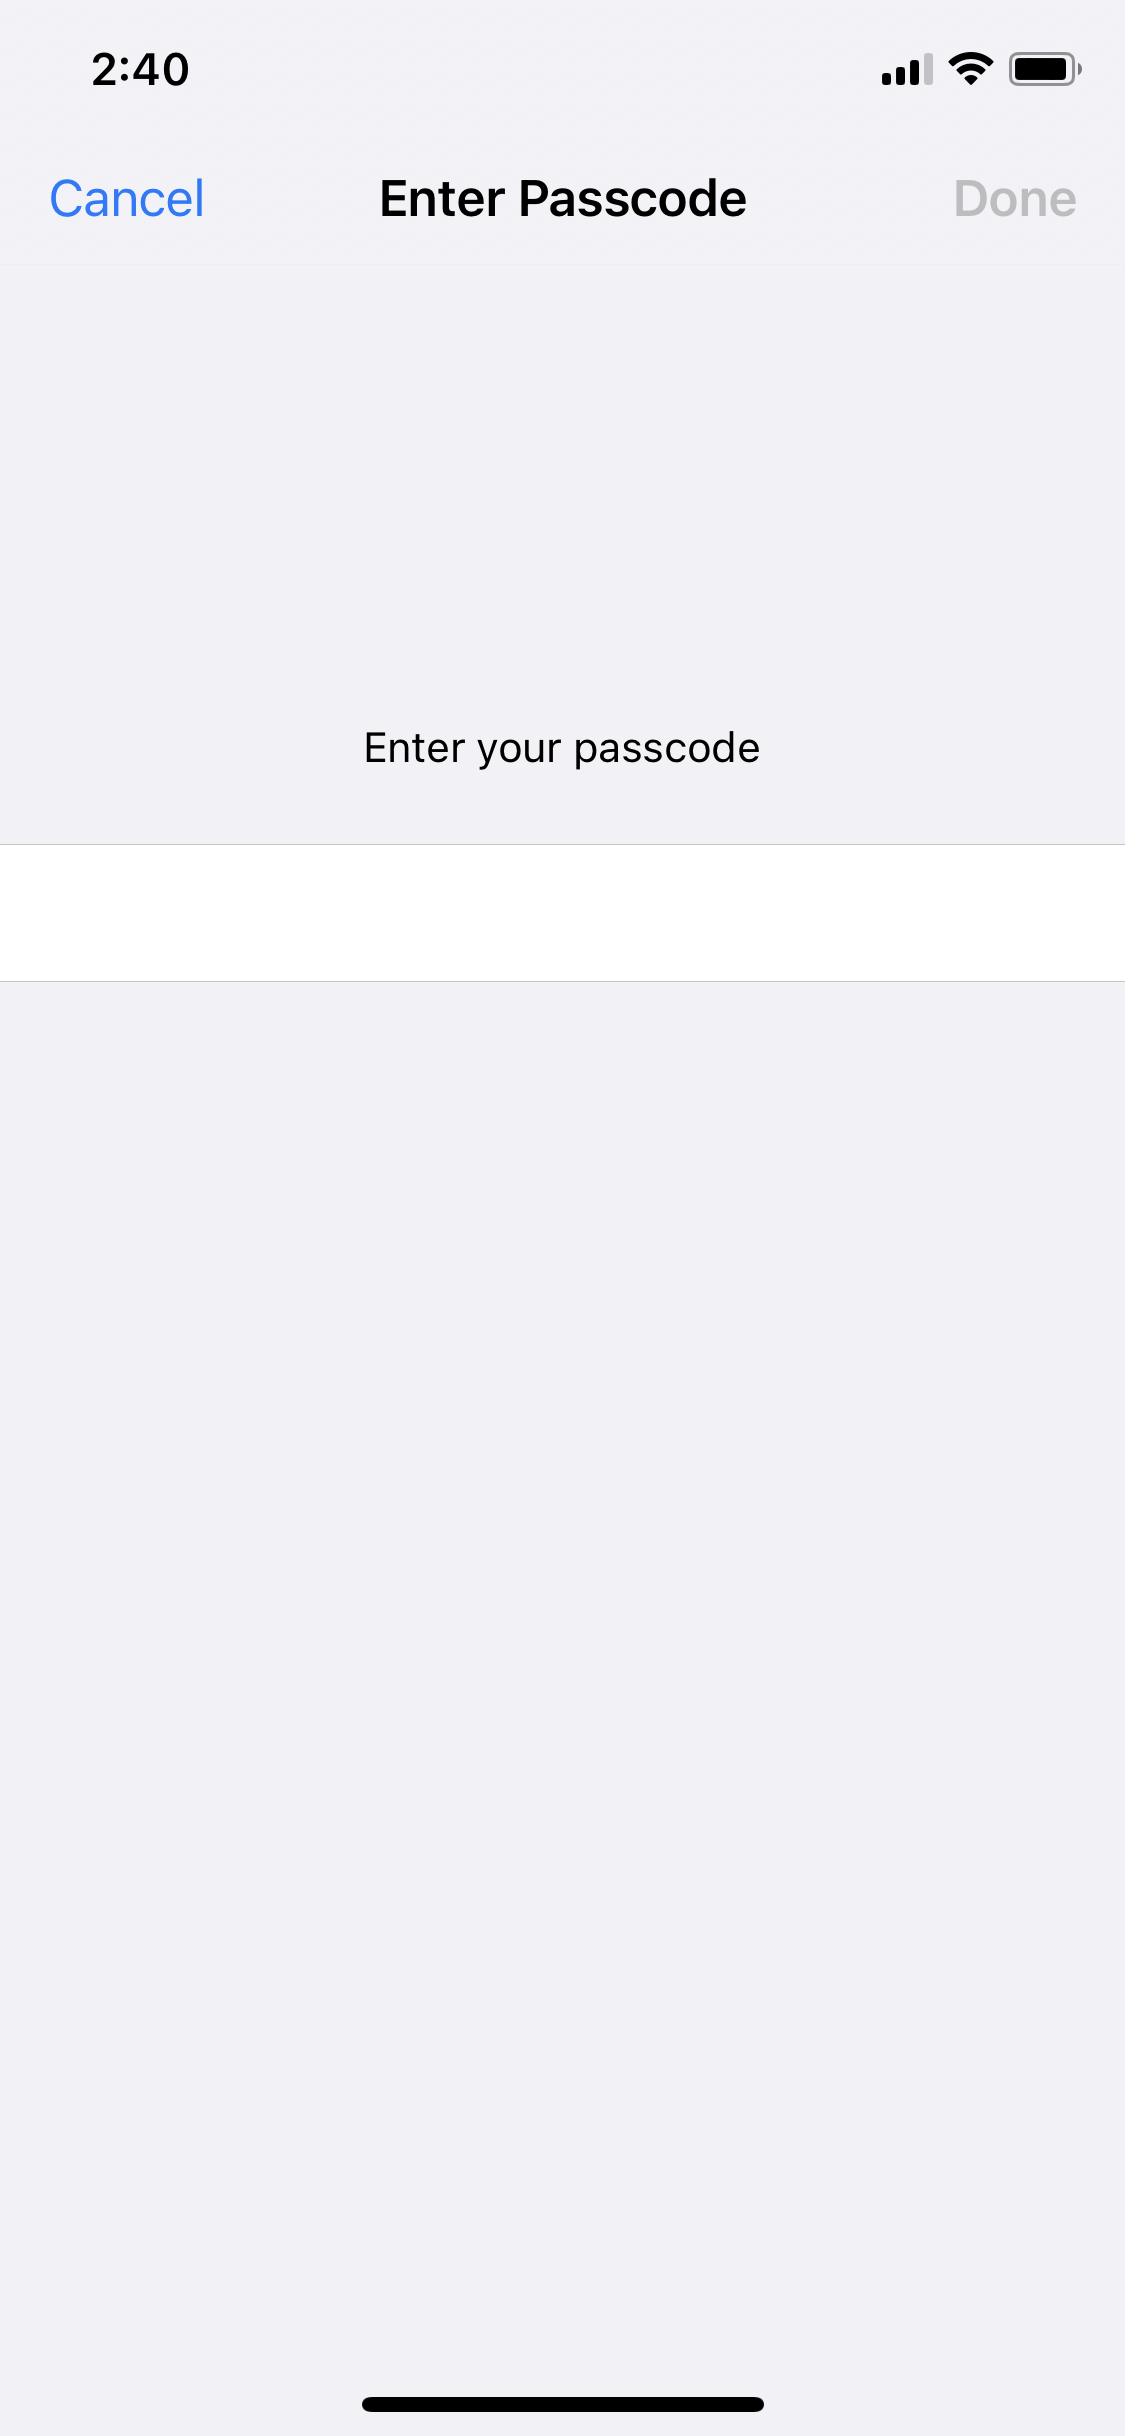 iPhone enter passcode screenshot